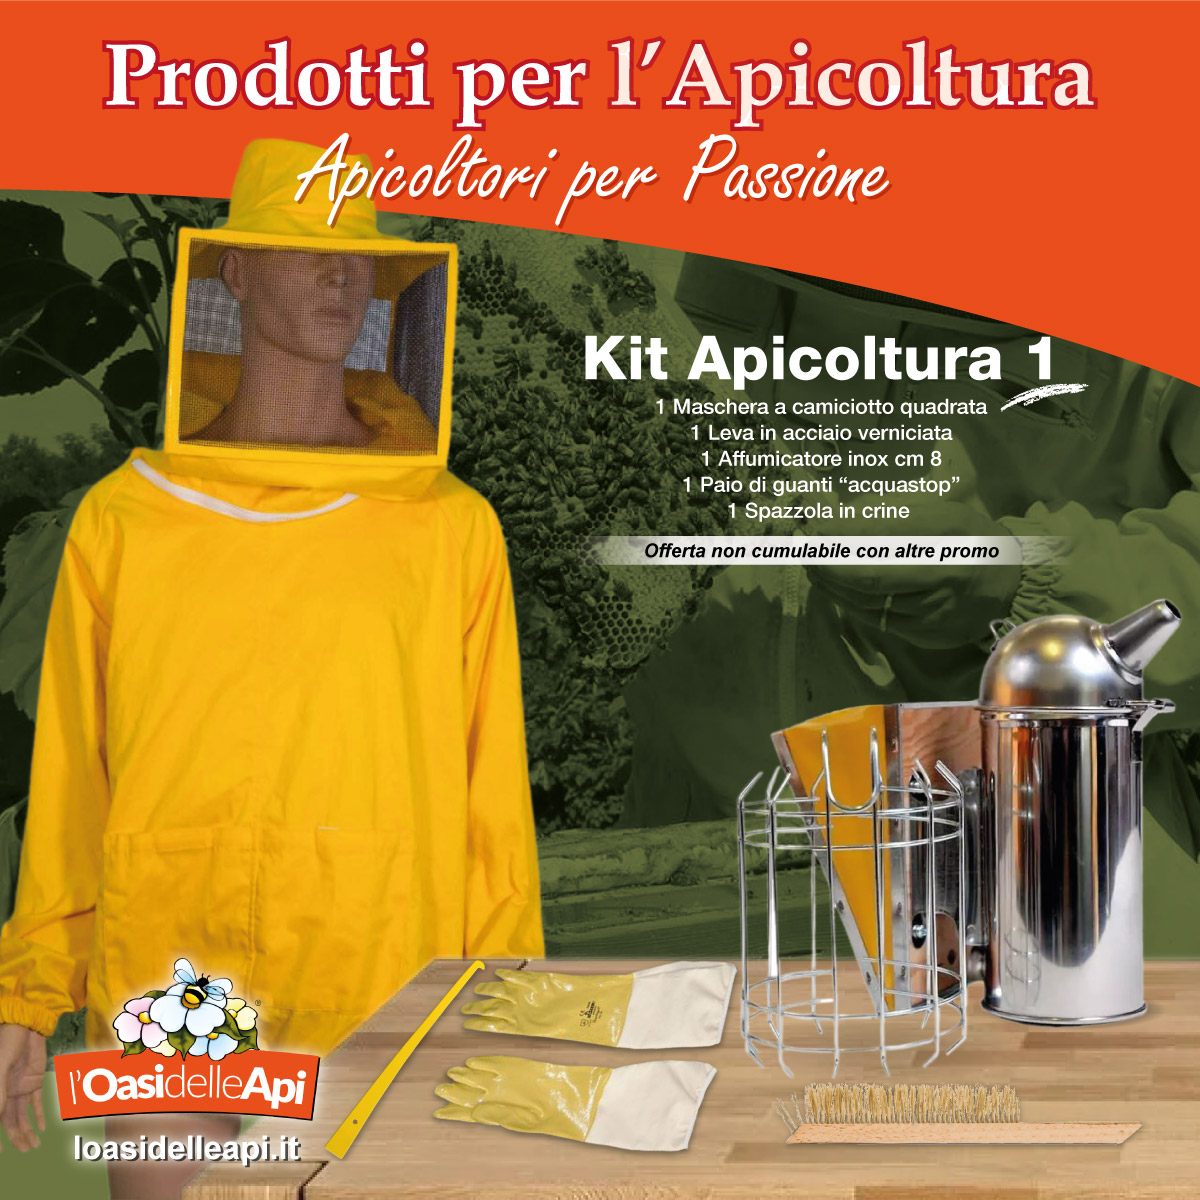 kit-start-apicoltura-1-oasi-delle-api-miele-italiano-pappa-reale-latina-sermoneta